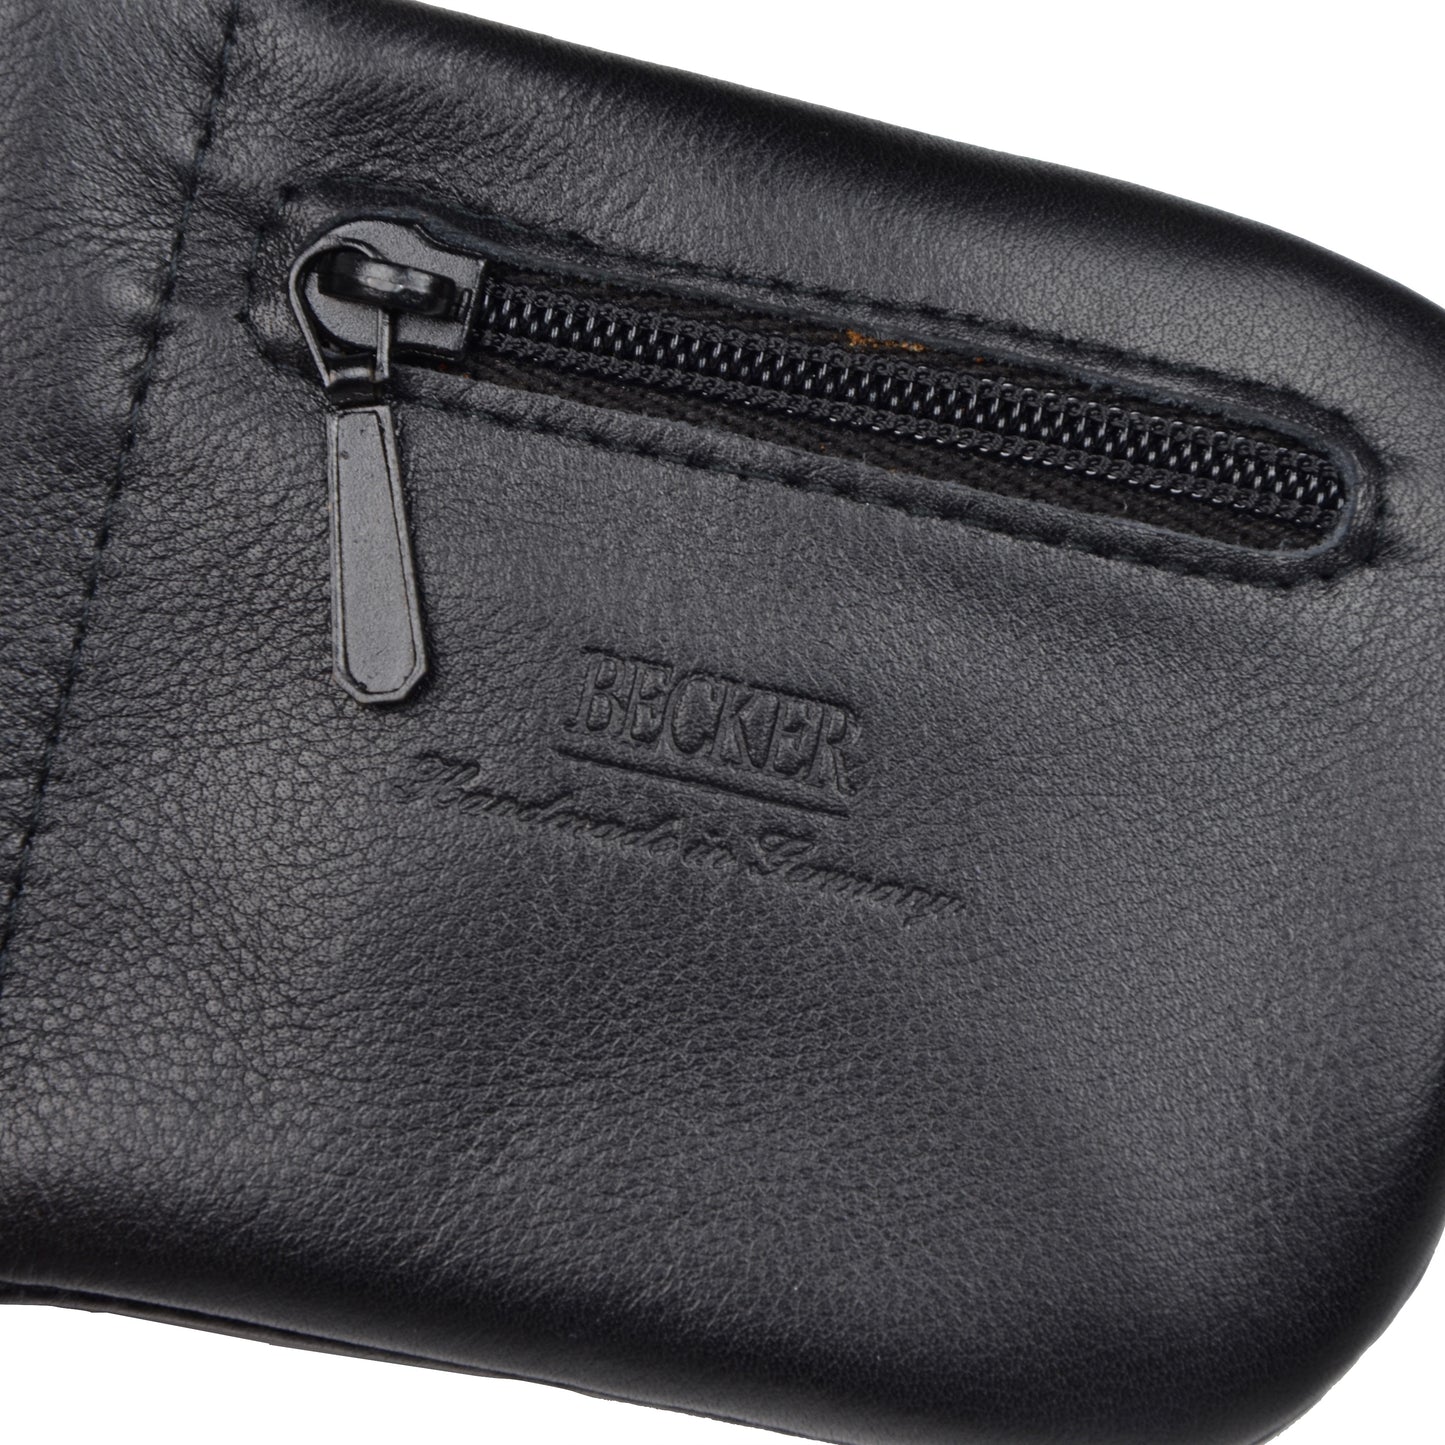 Becker Handmade Leather Keychain Wallet - Black